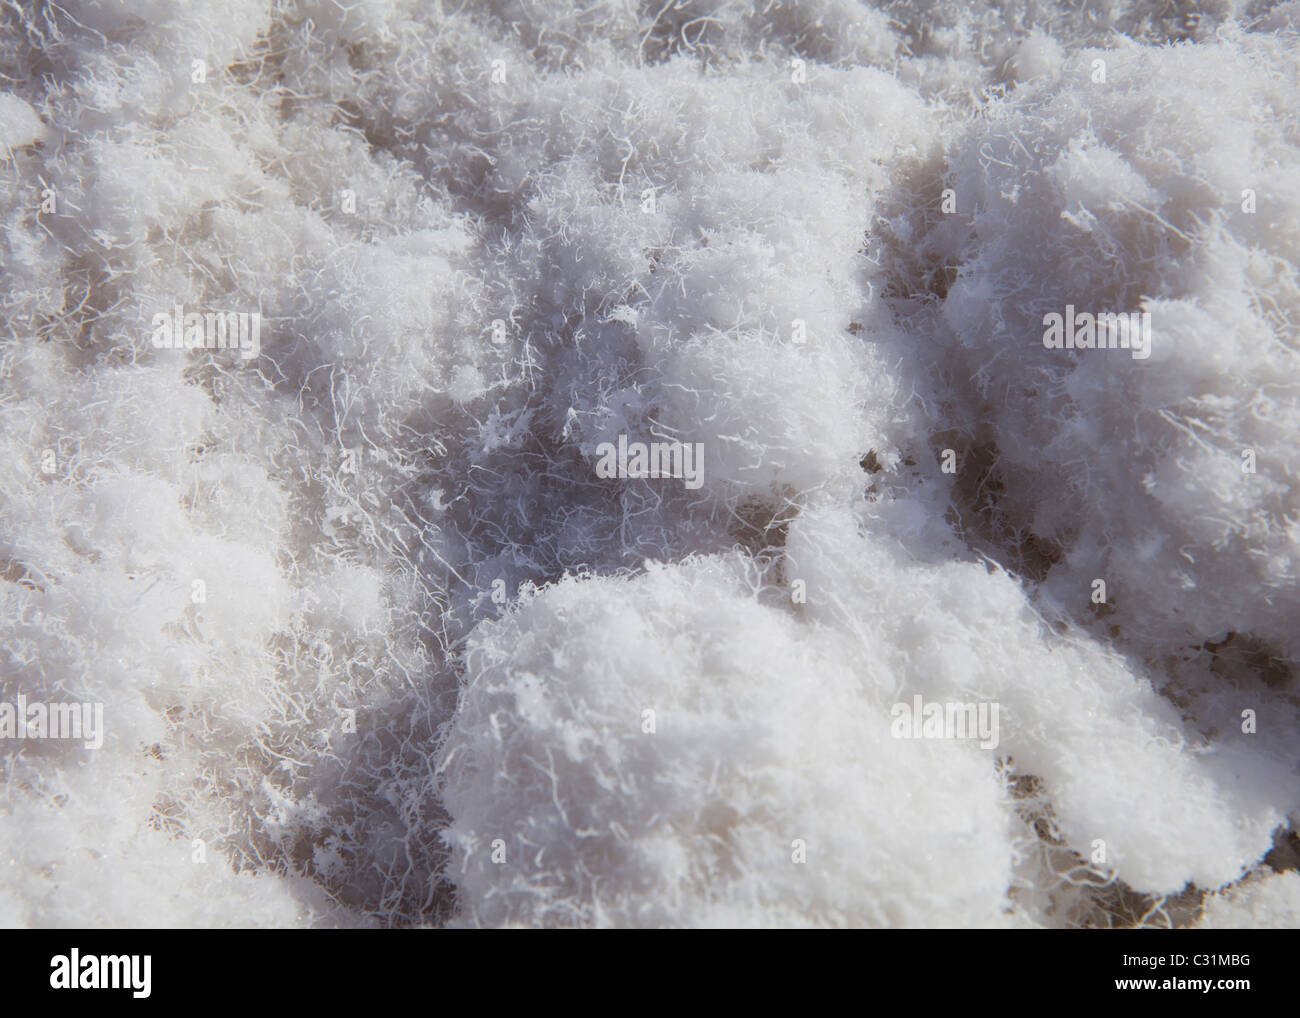 Closeup detail of salt crystals on dry salt lake surface Stock Photo